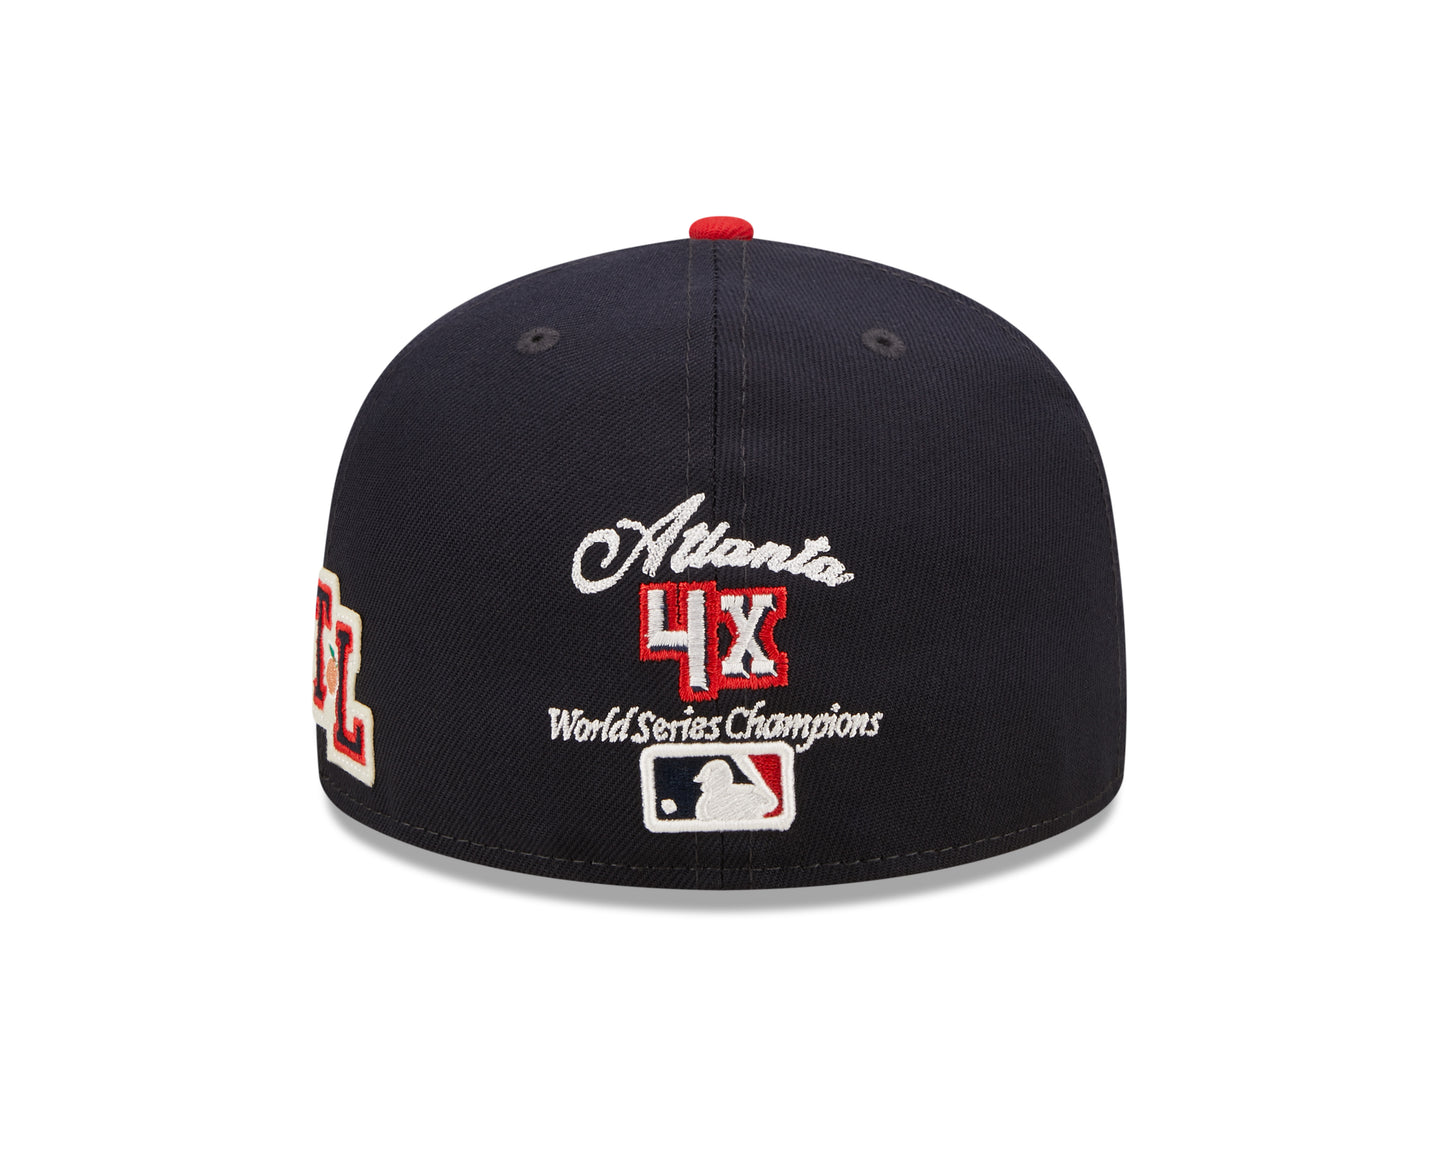 Atlanta Braves World Series Letterman Patch 59fifty Hat